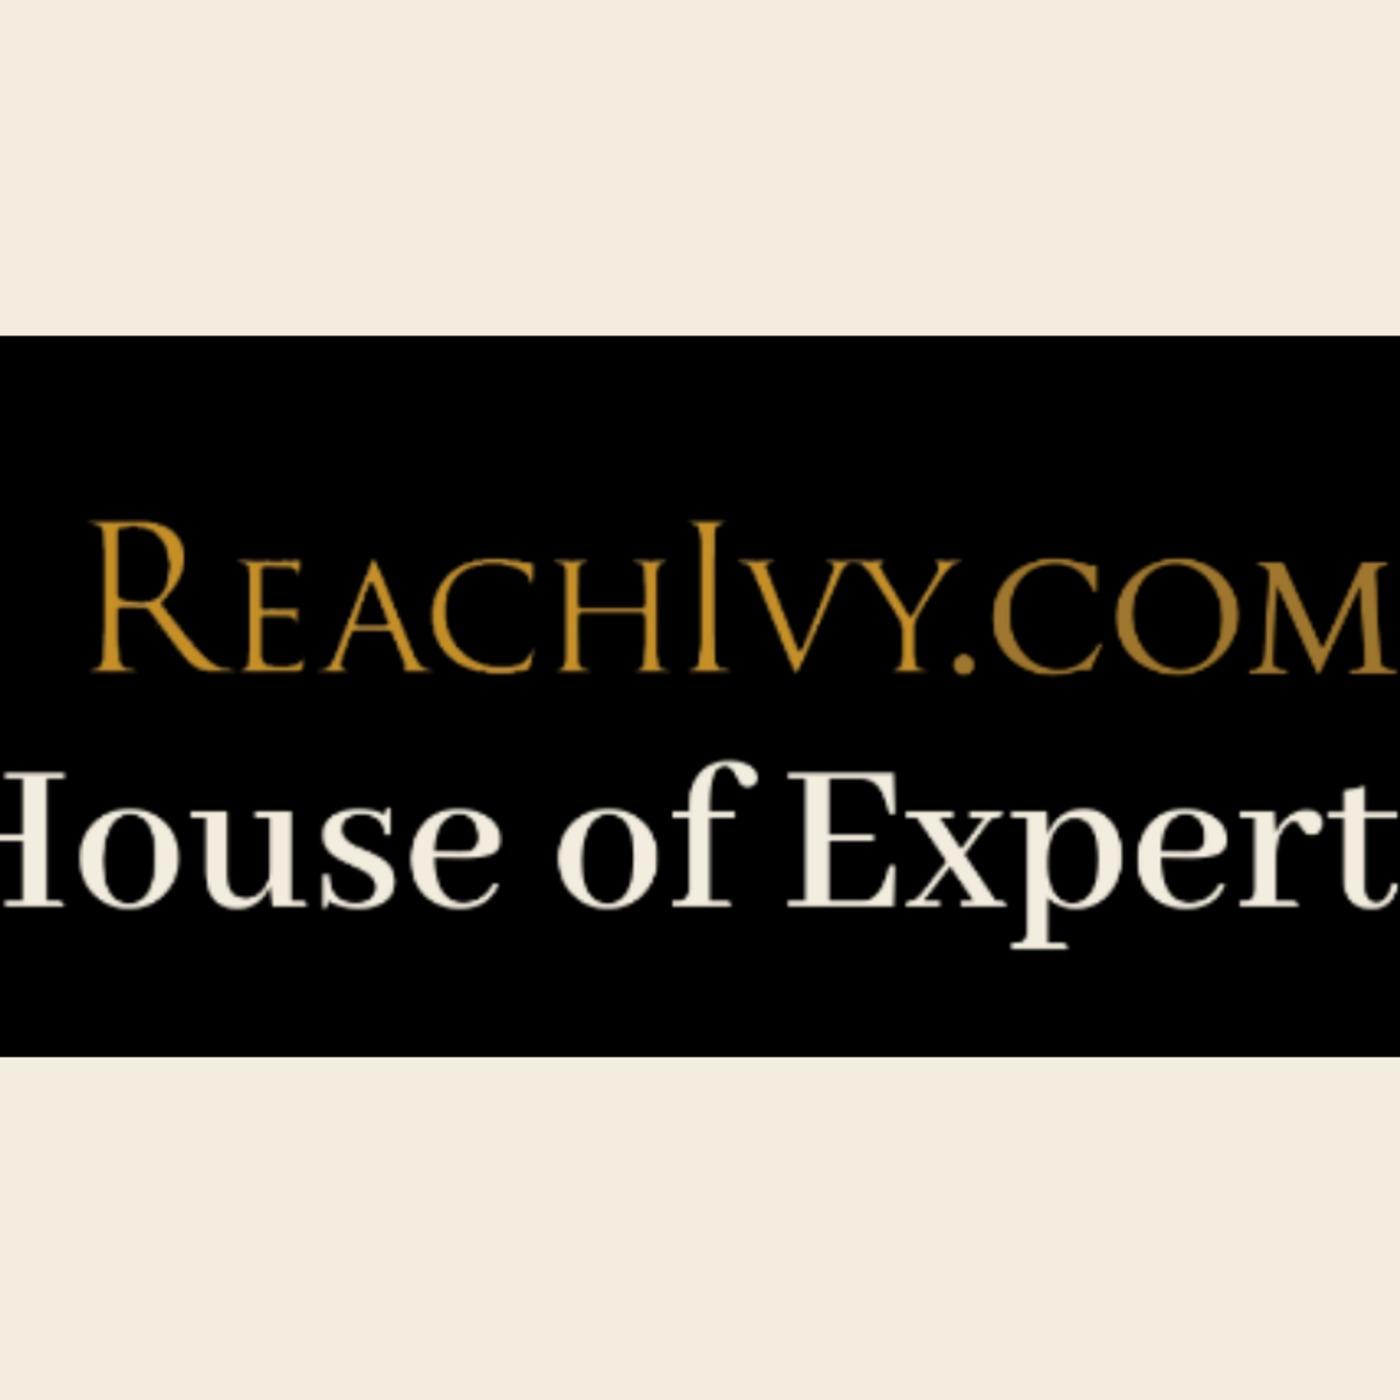 ReachIvy.com: House of Experts